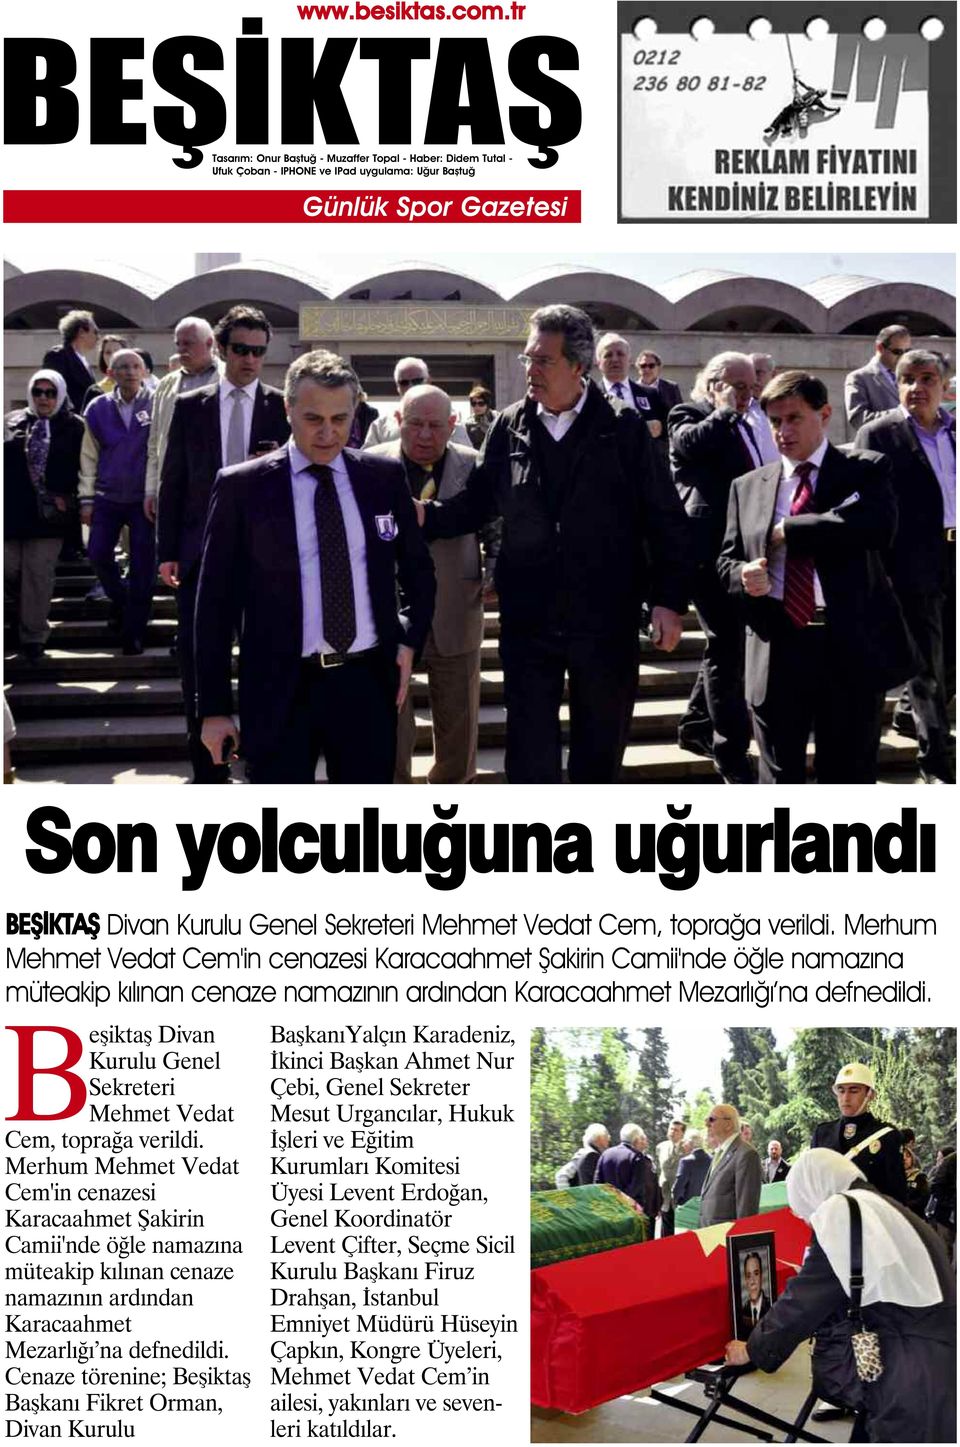 Beşiktaş Divan Kurulu Genel Sekreteri Mehmet Vedat Cem, toprağa verildi.